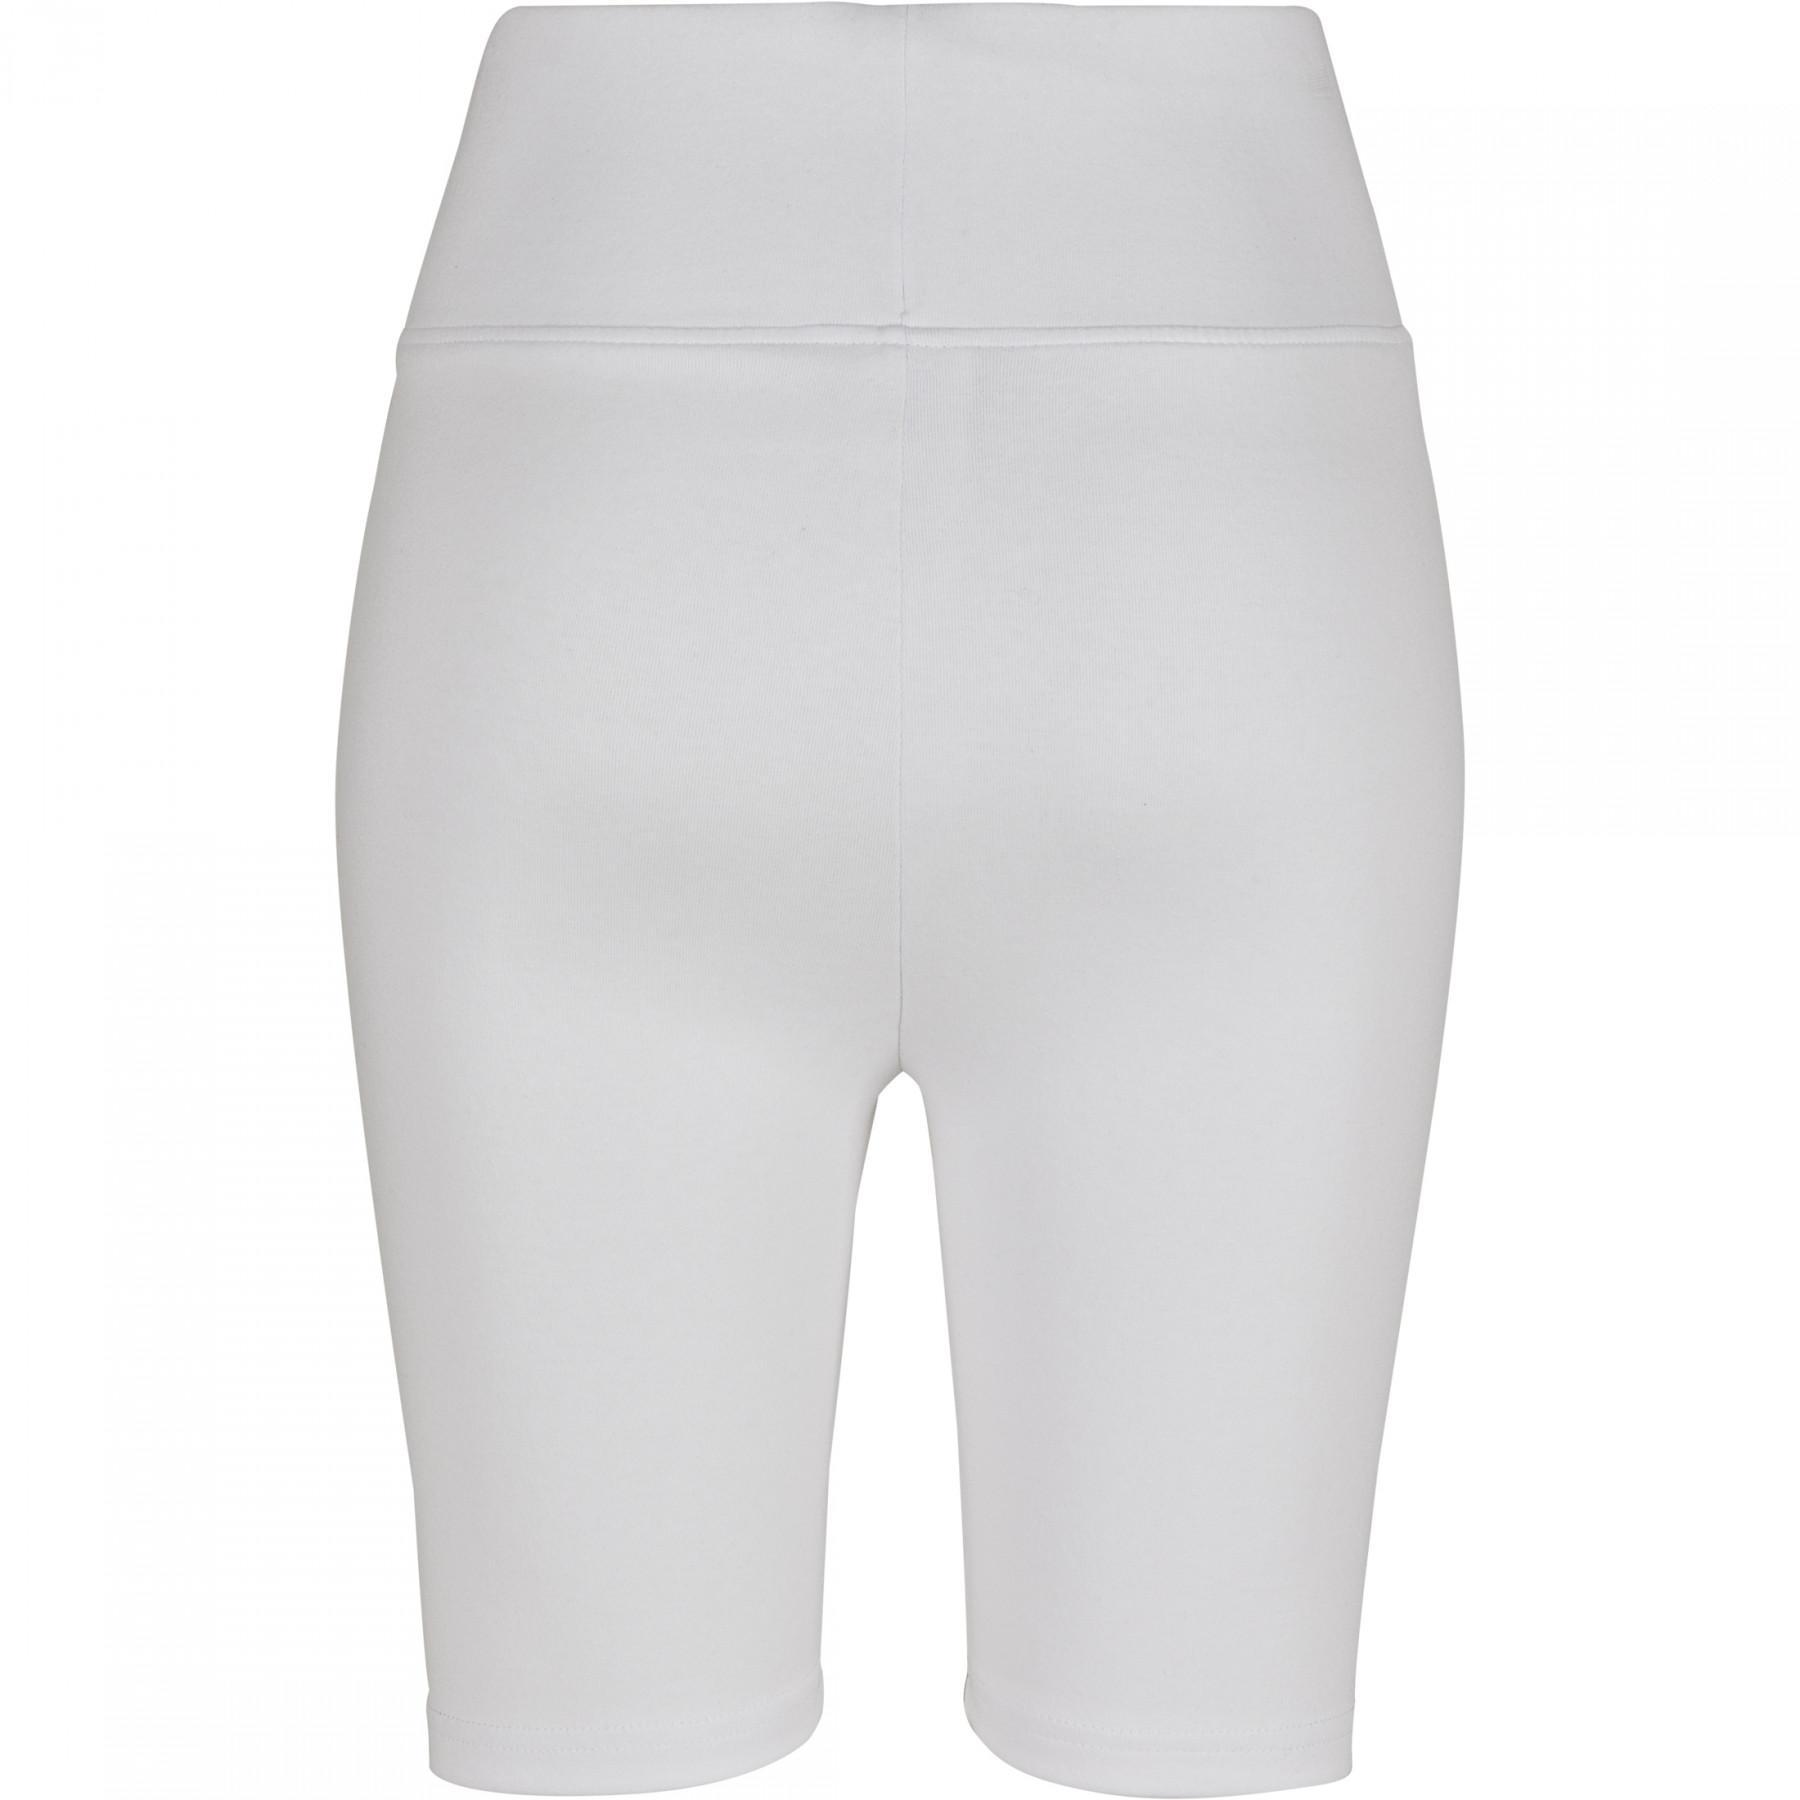 Women's Urban Classic waist XXL shorts